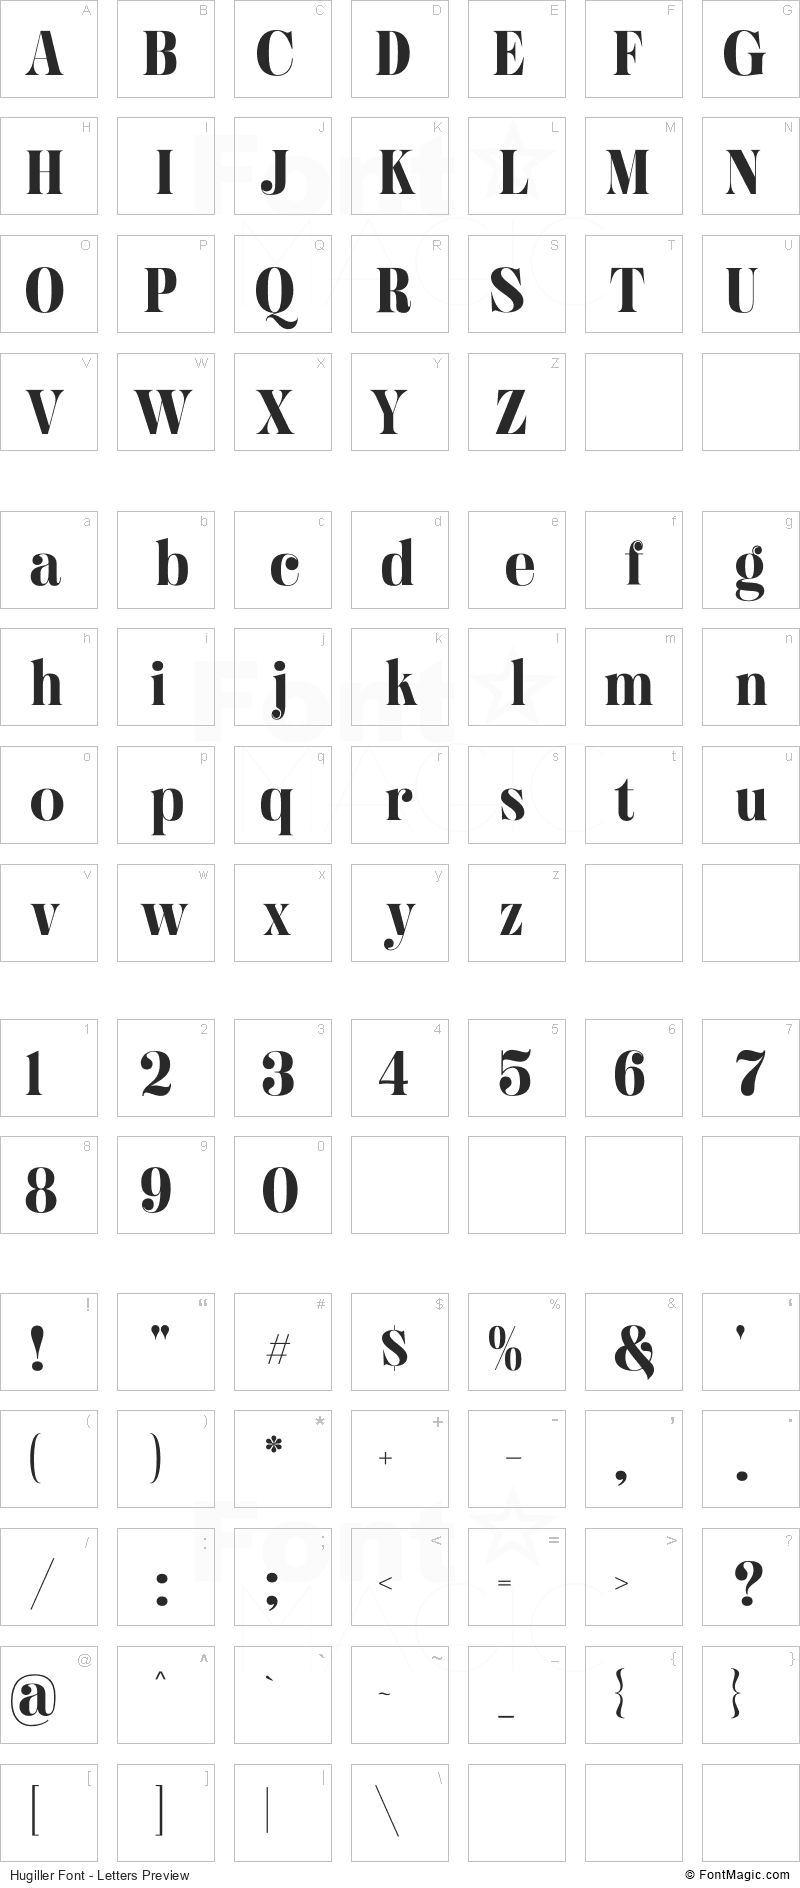 Hugiller Font - All Latters Preview Chart